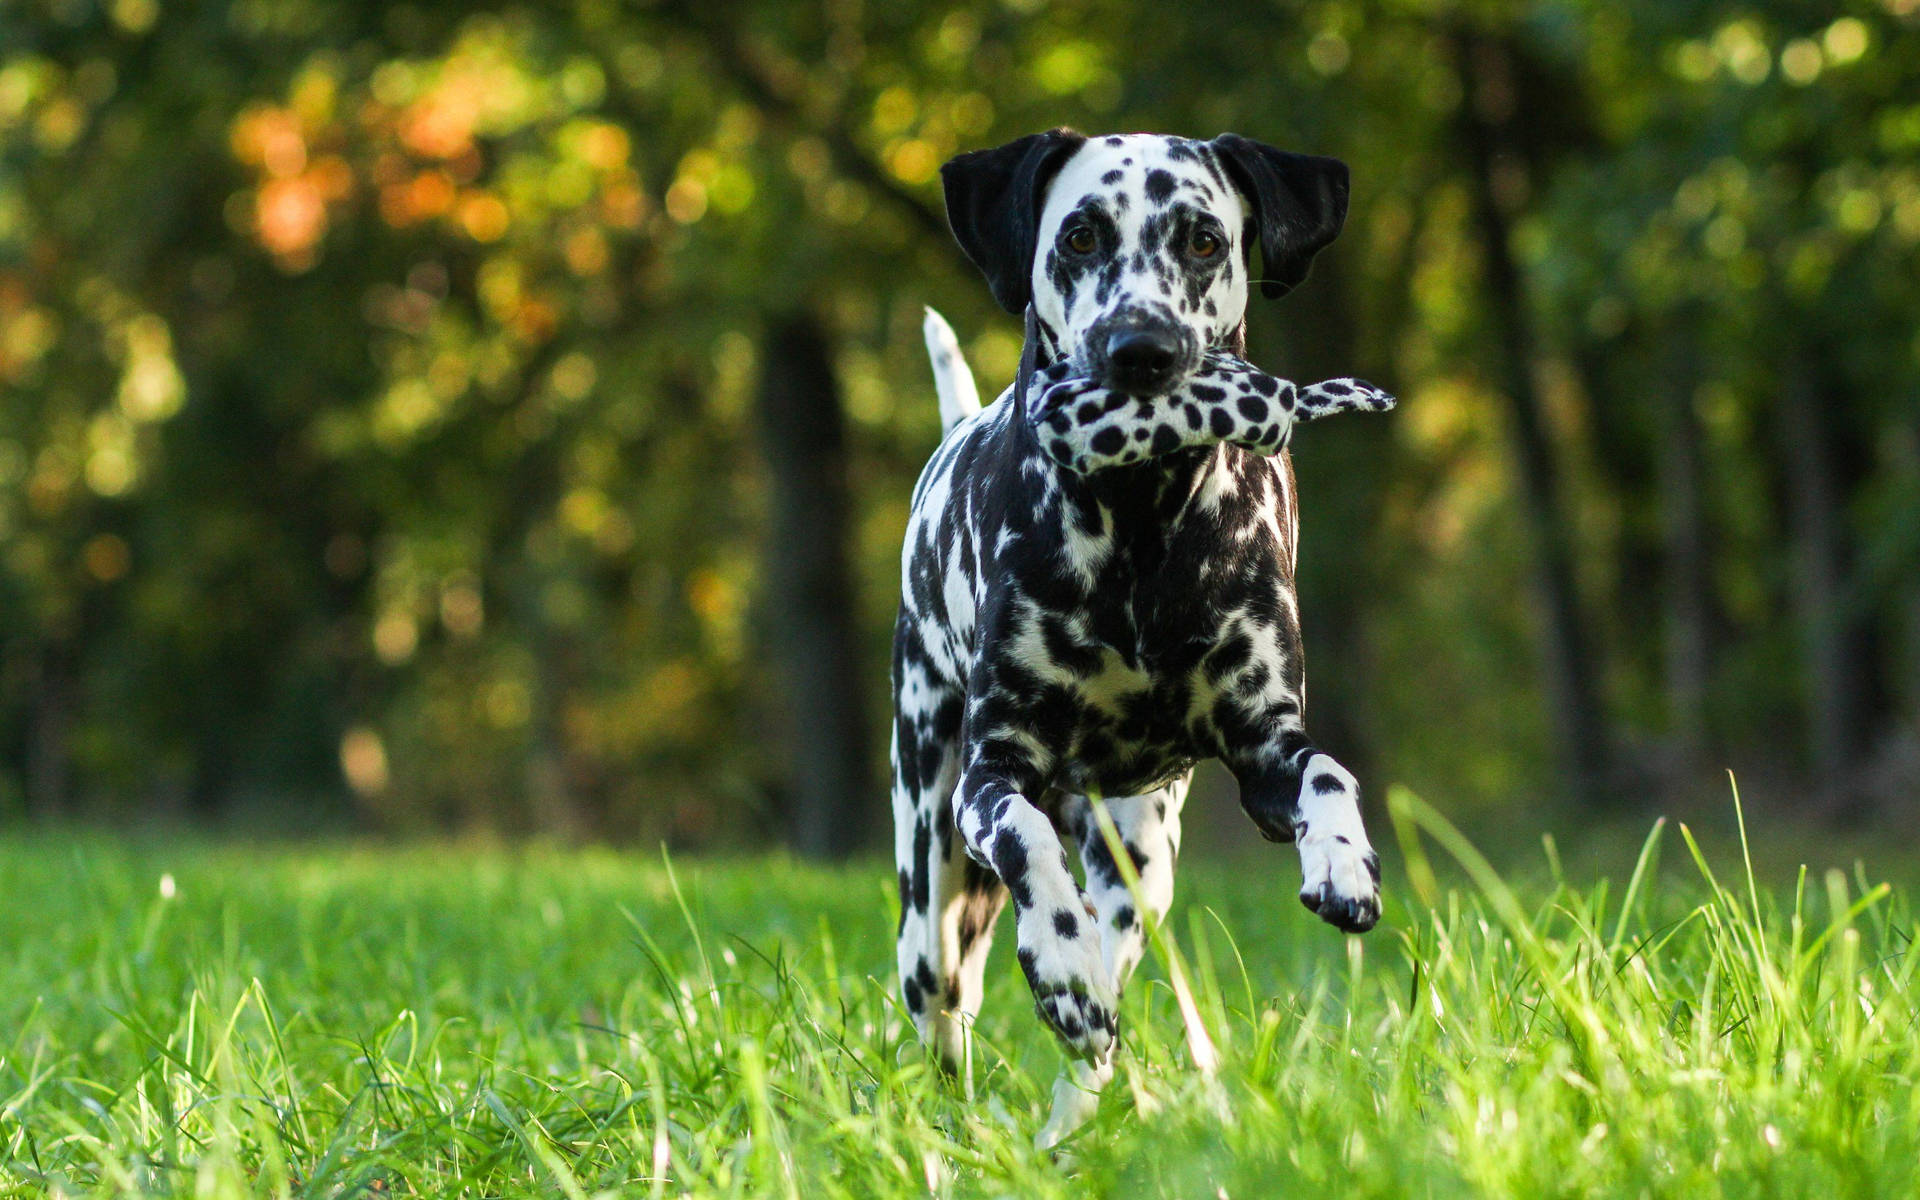 Dog wallpaper of adult dalmatian running on grass